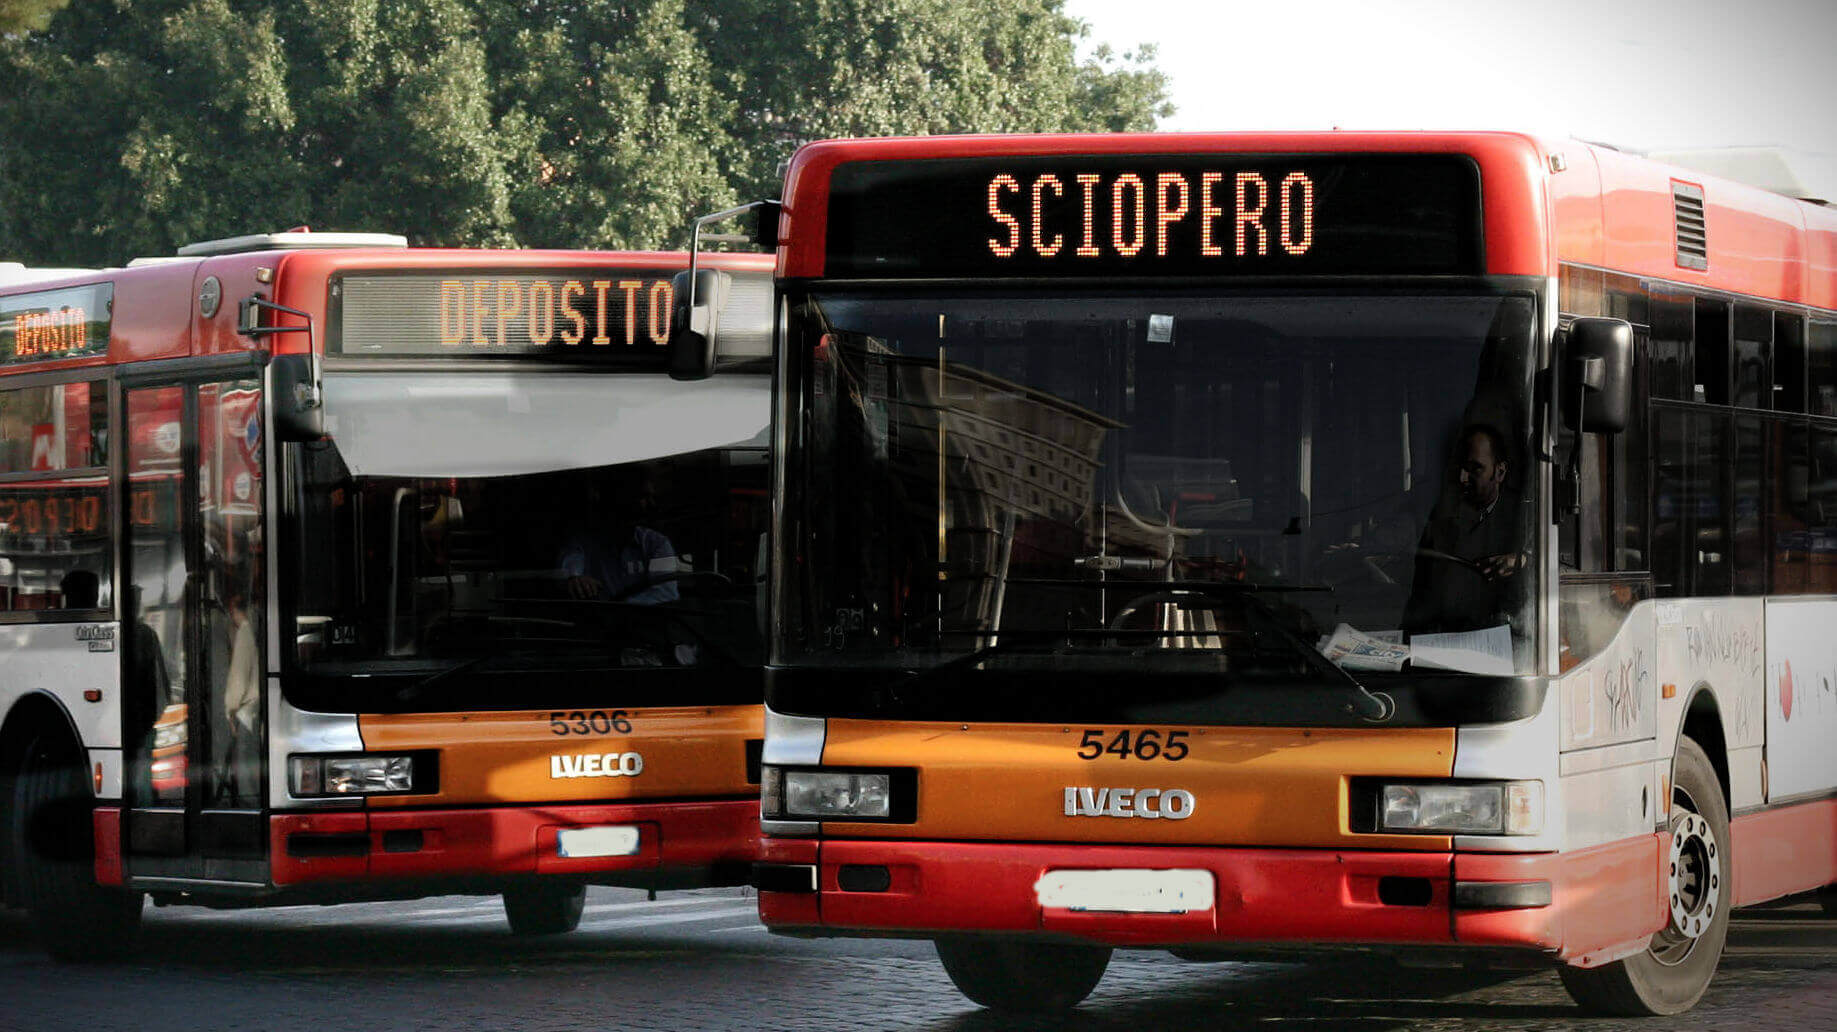 Rome public transportation strikes creates hassles